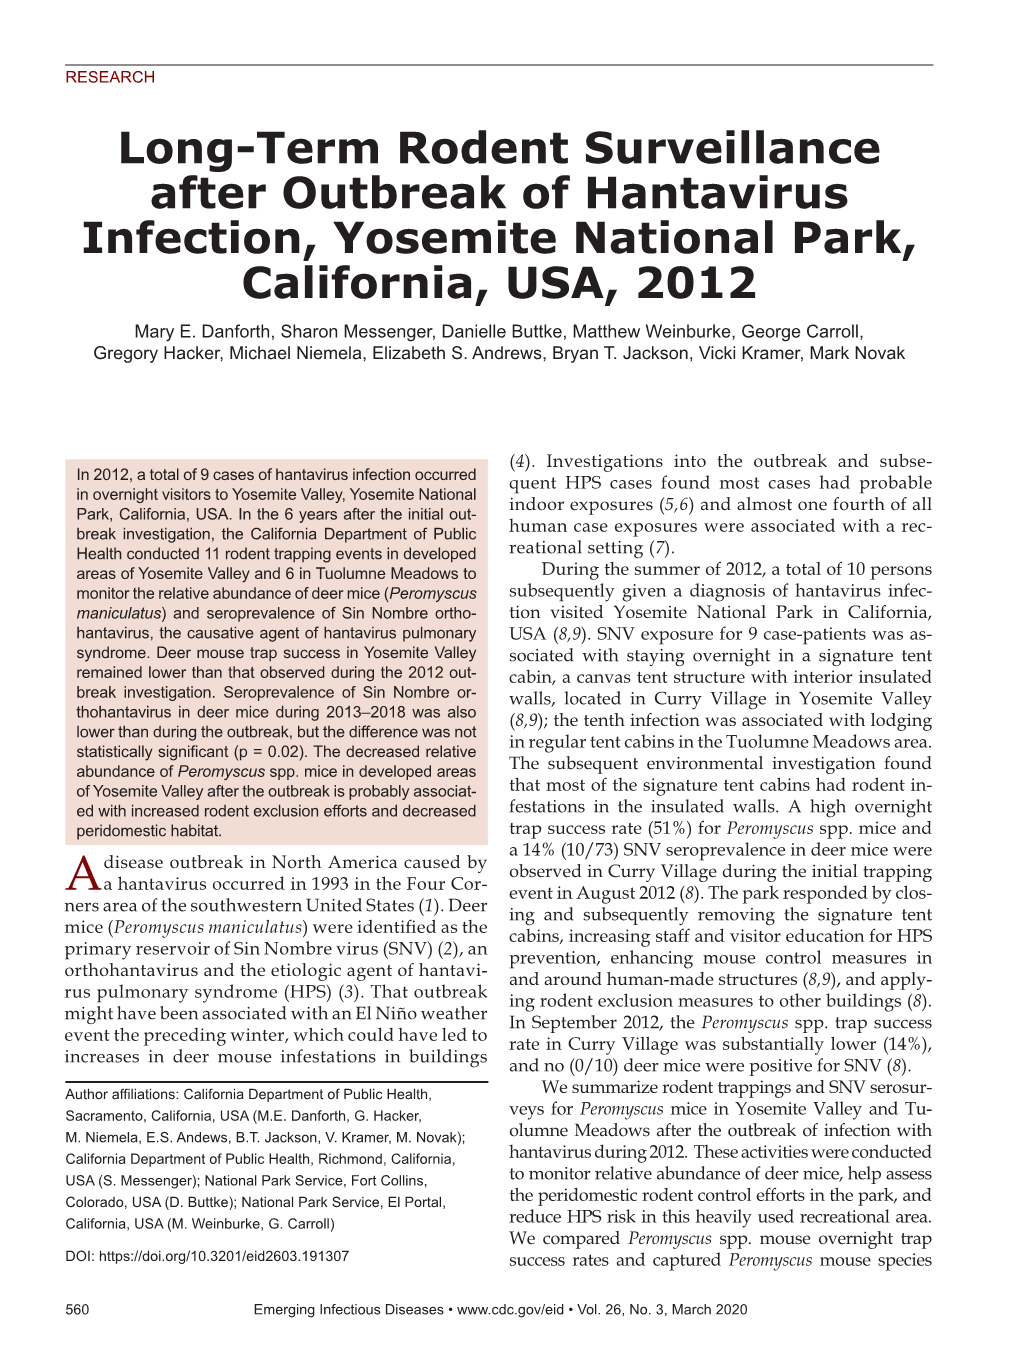 Long-Term Rodent Surveillance After Outbreak of Hantavirus Infection, Yosemite National Park, California, USA, 2012 Mary E